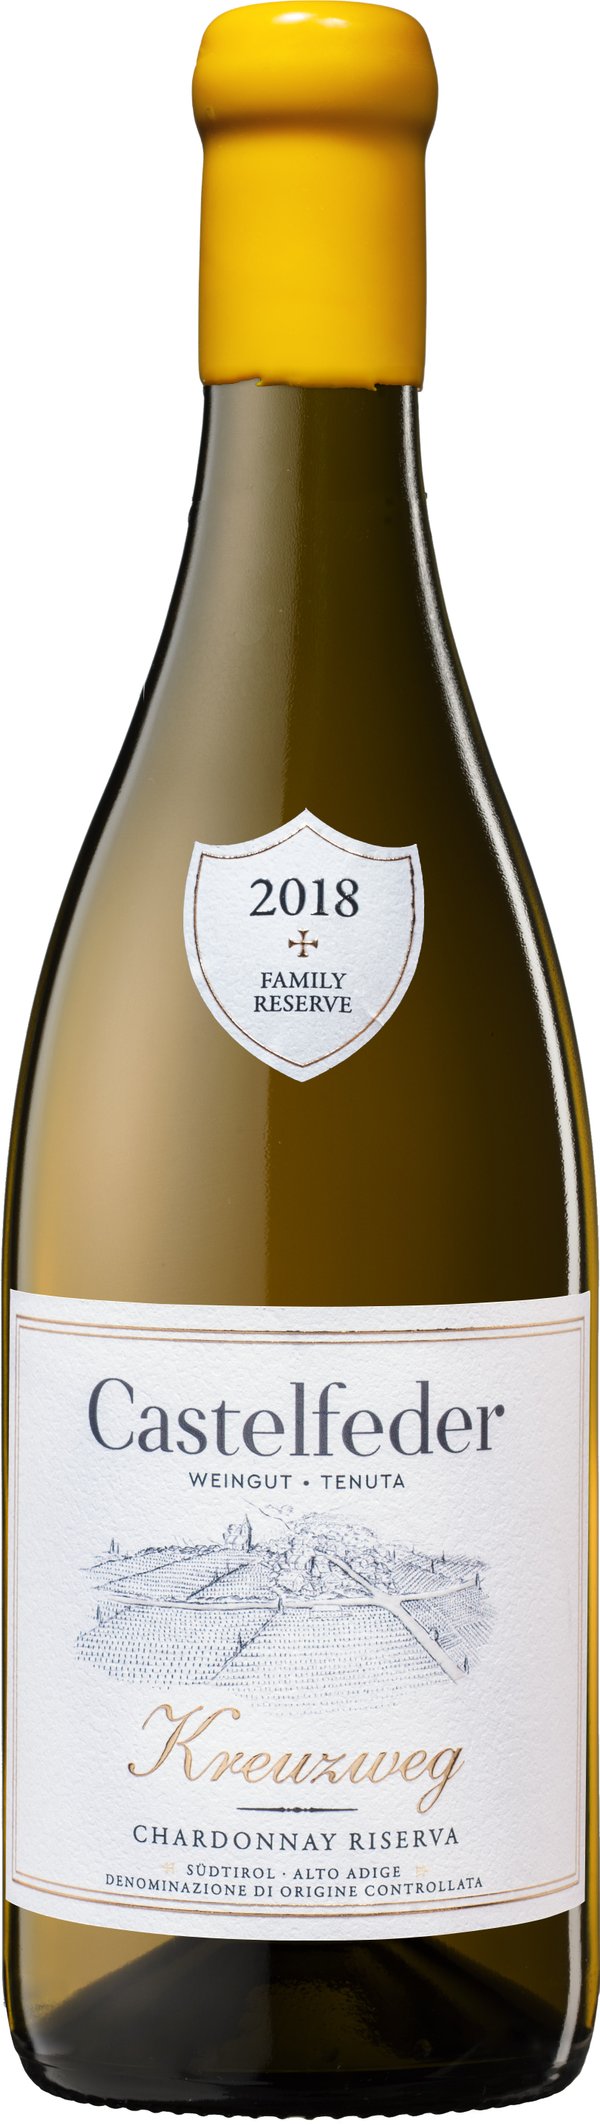 Chardonnay Riserva "KREUZWEG" Family Reserve 2018 Castelfeder